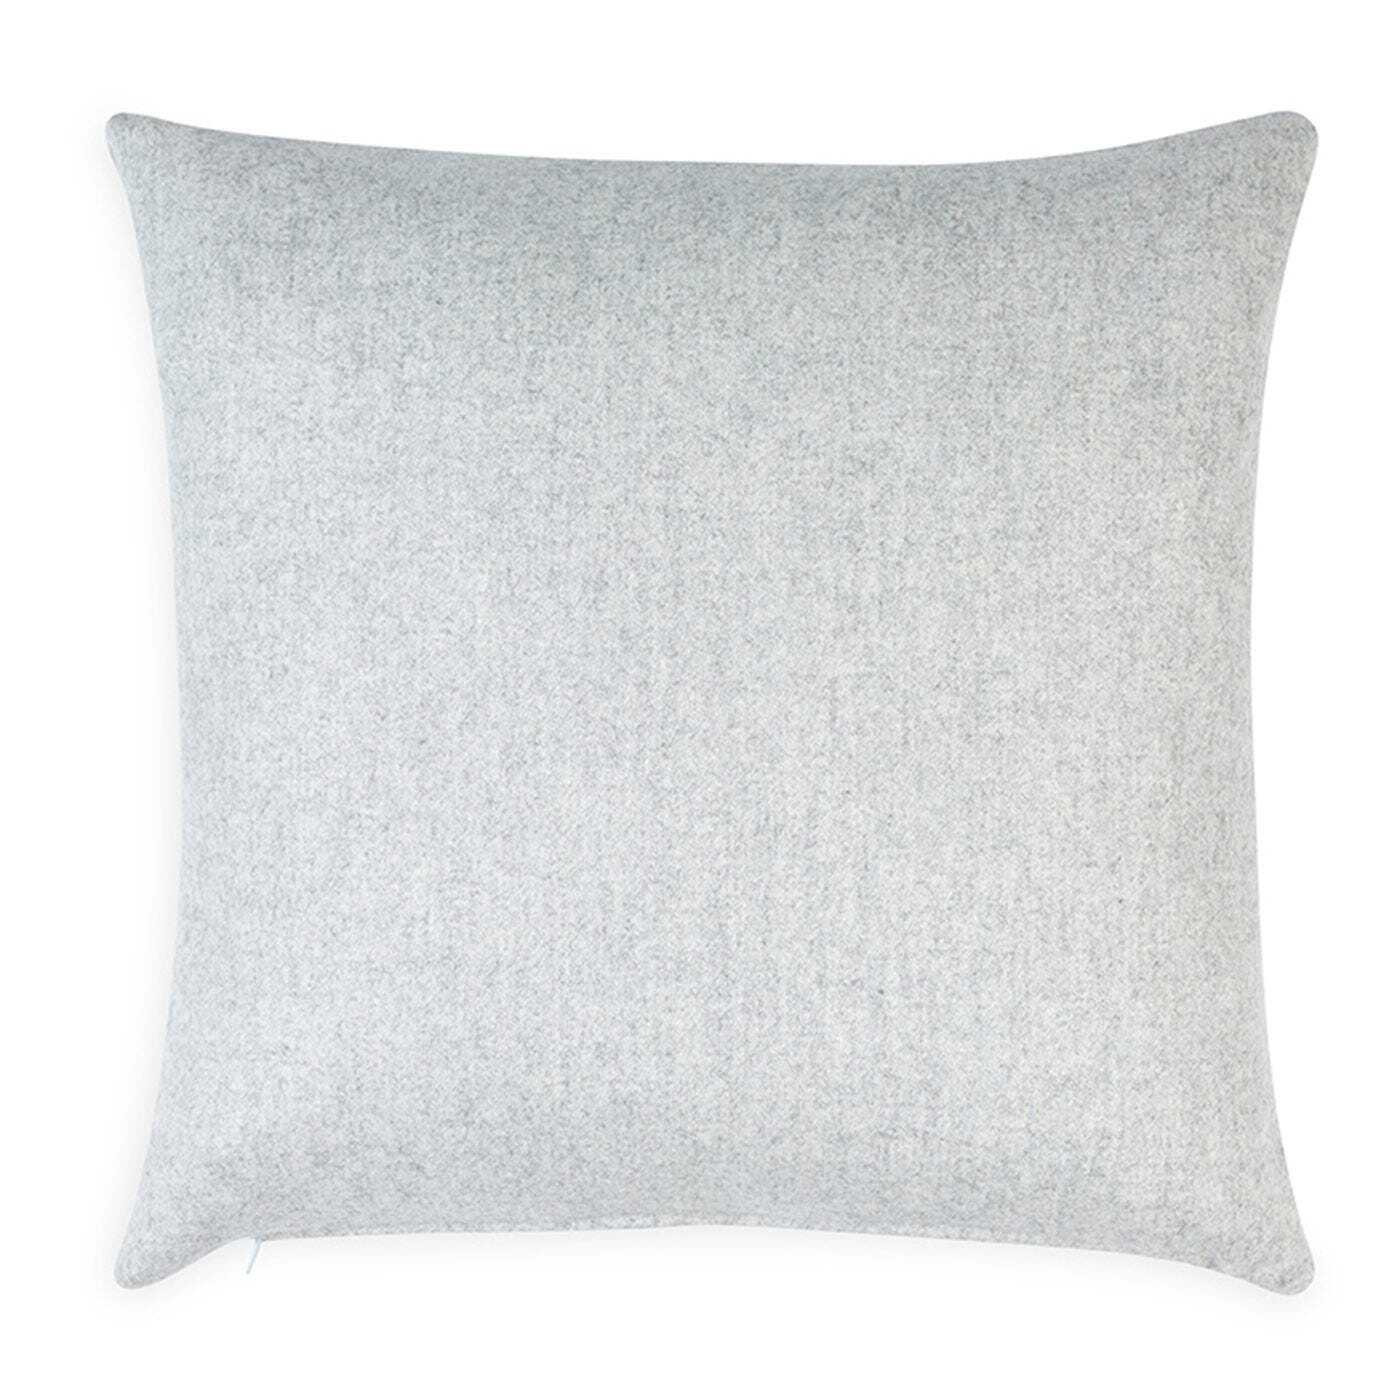 Heal's Islington Cushion Grey 60 x 60cm - image 1